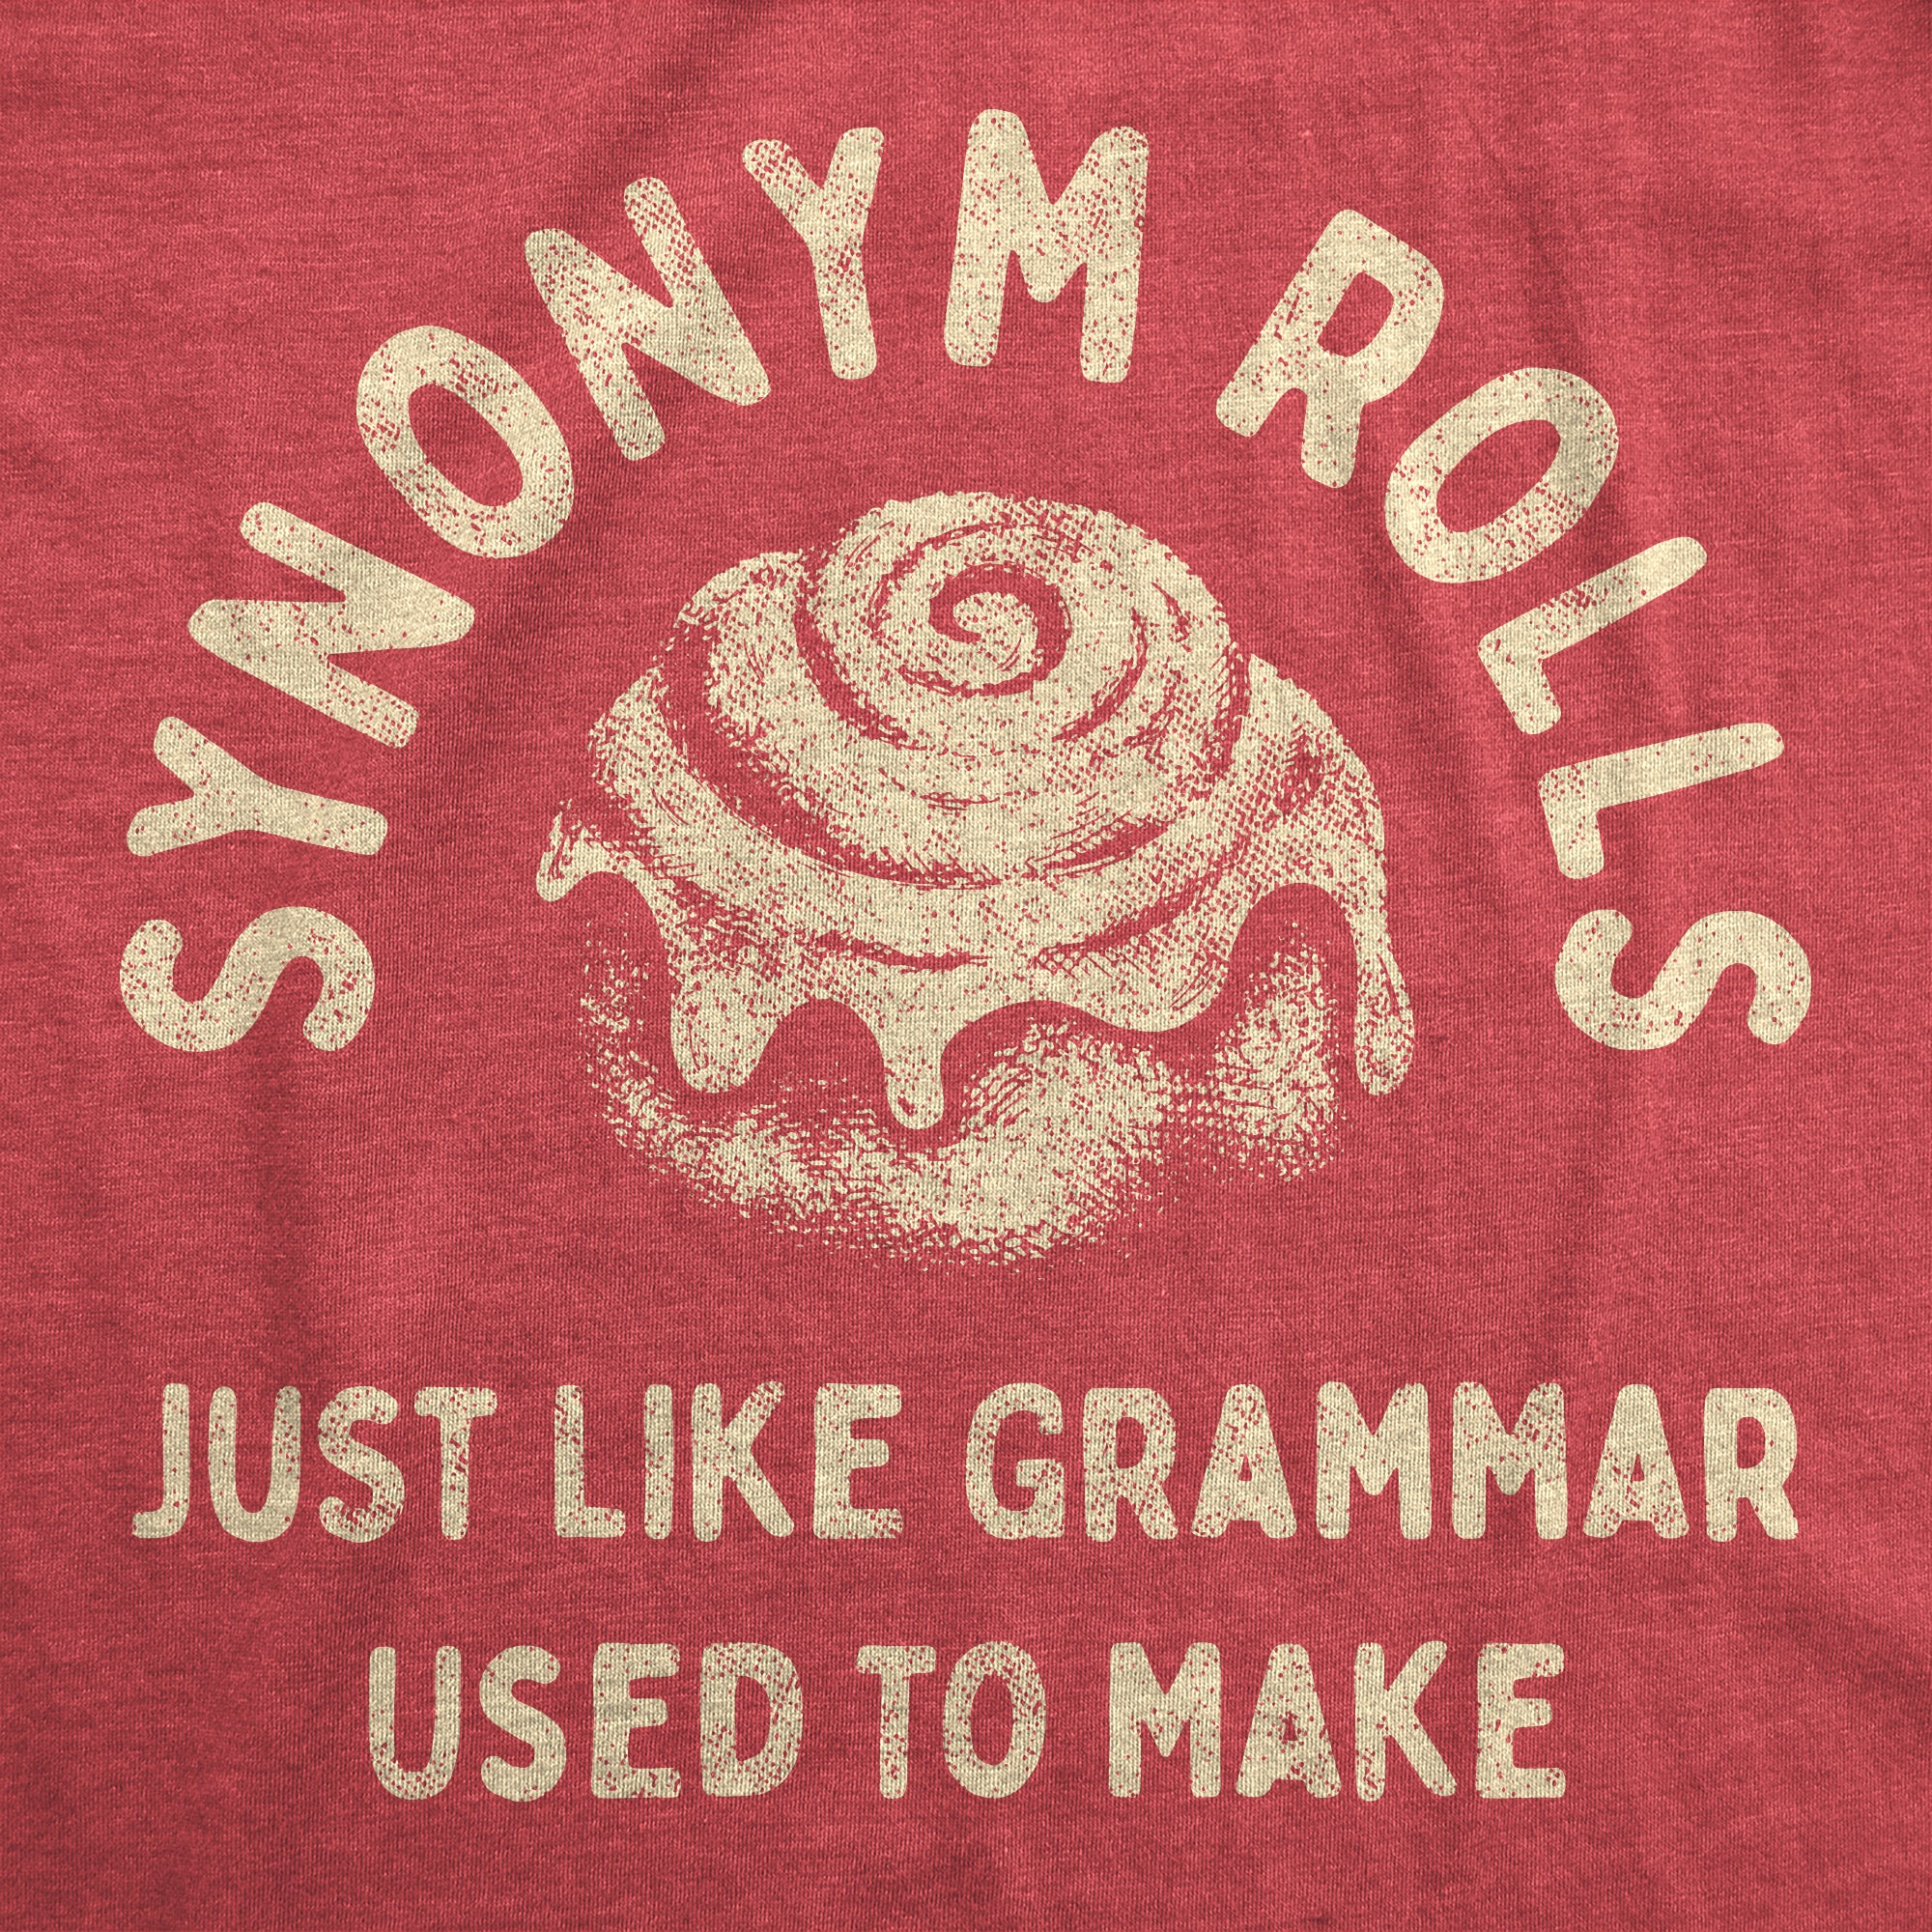 Funny Heather Red - Synonym Rolls Synonym Rolls Just Like Grammar Used To Make Mens T Shirt Nerdy food Tee